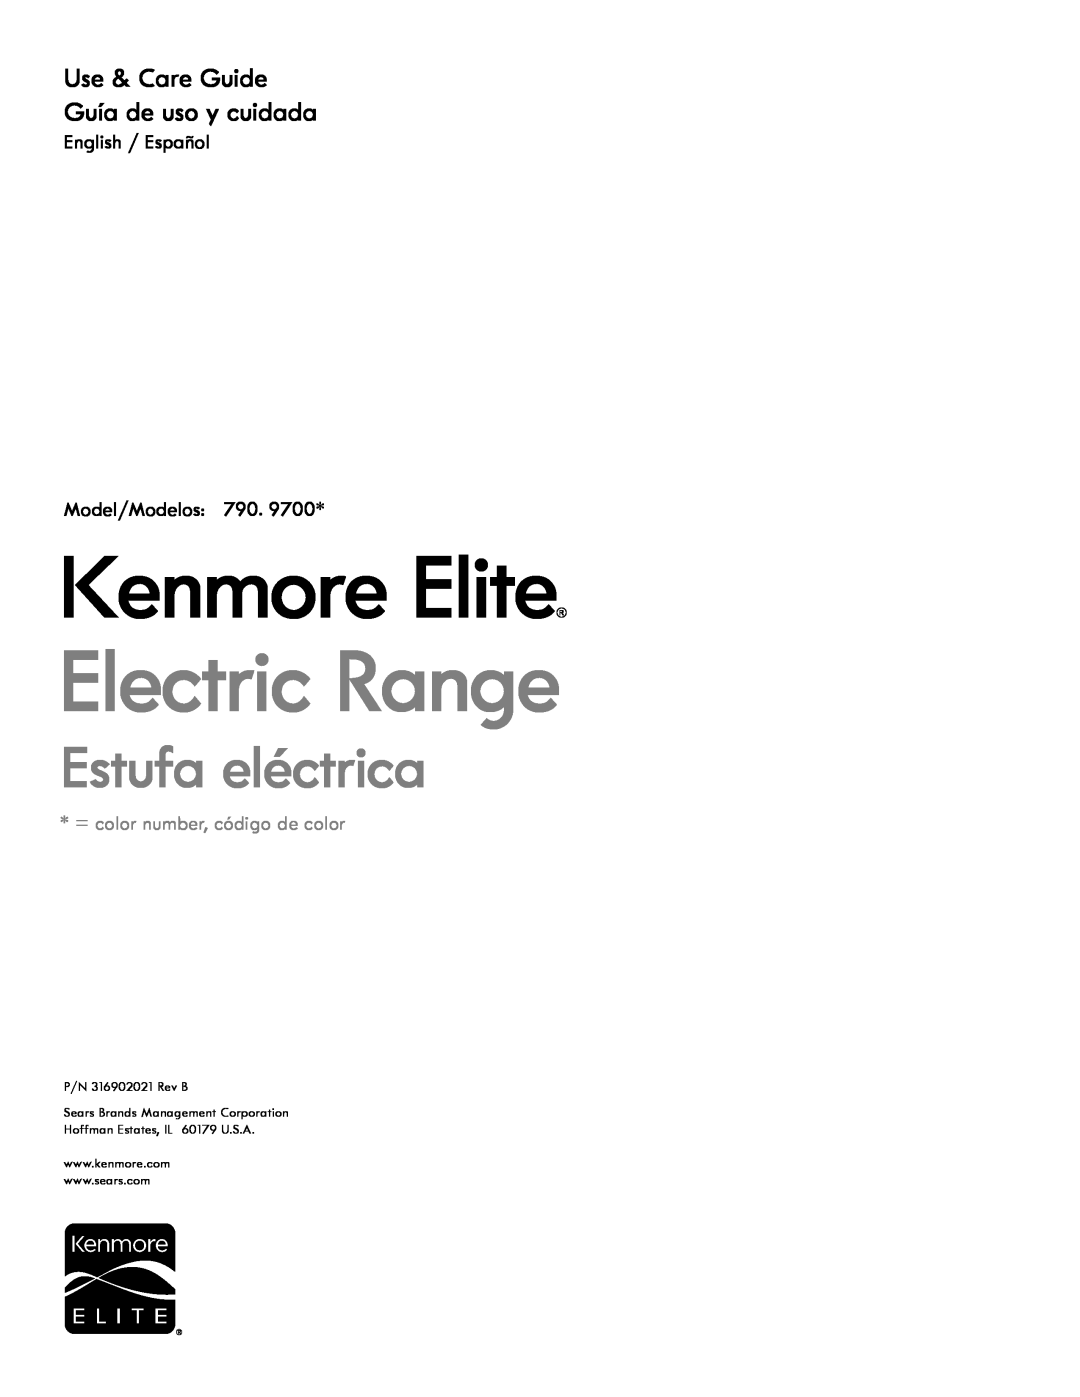 Kenmore 790 manual English Español, Sears Roebuck and Co., Hoffman Estates, IL 60179 U.S.A, p/n, Gas Range, Estufa a gas 